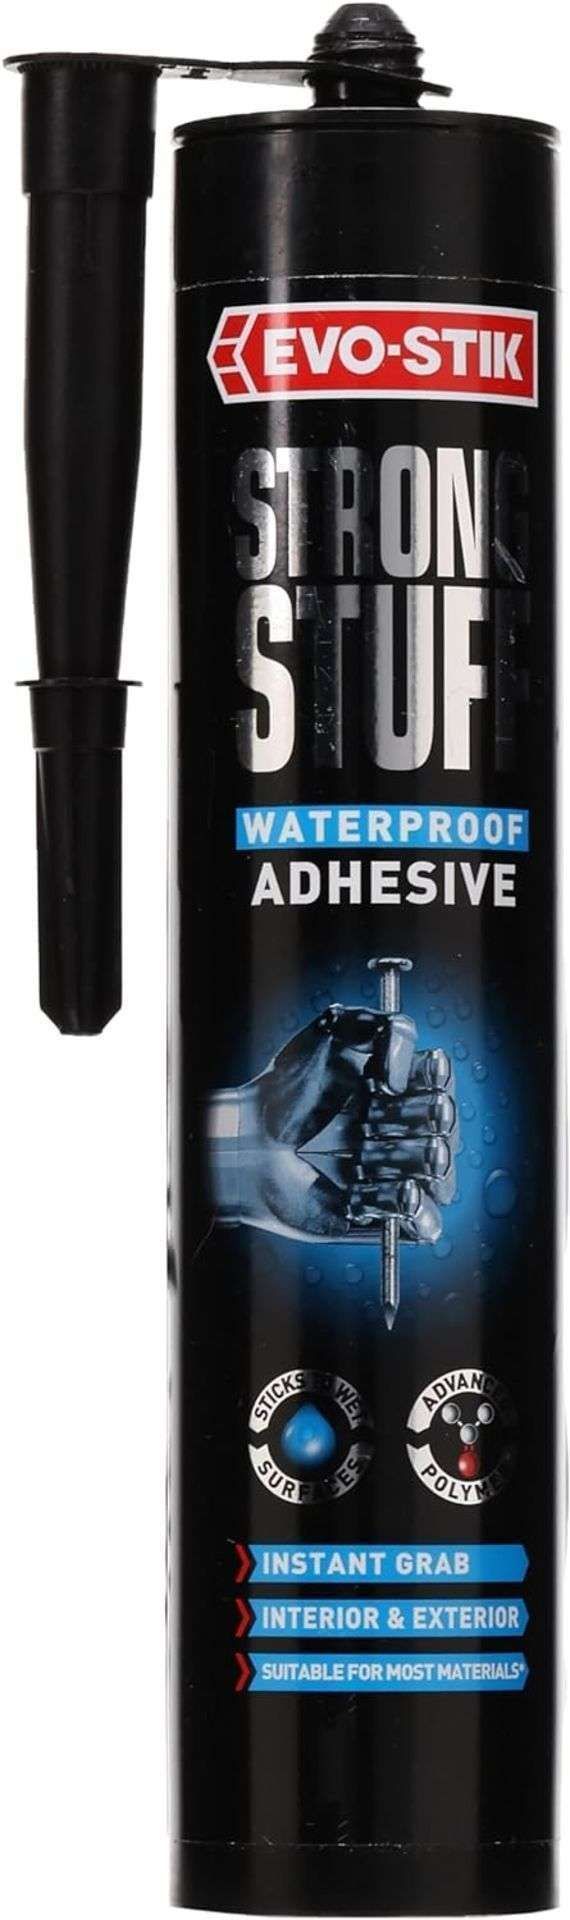 48x BRAND NEW EVO-STIK Strong Stuff Waterproof Adhesive 290ml. RRP £11.99 EACH. (R9-5). EVO-STIK